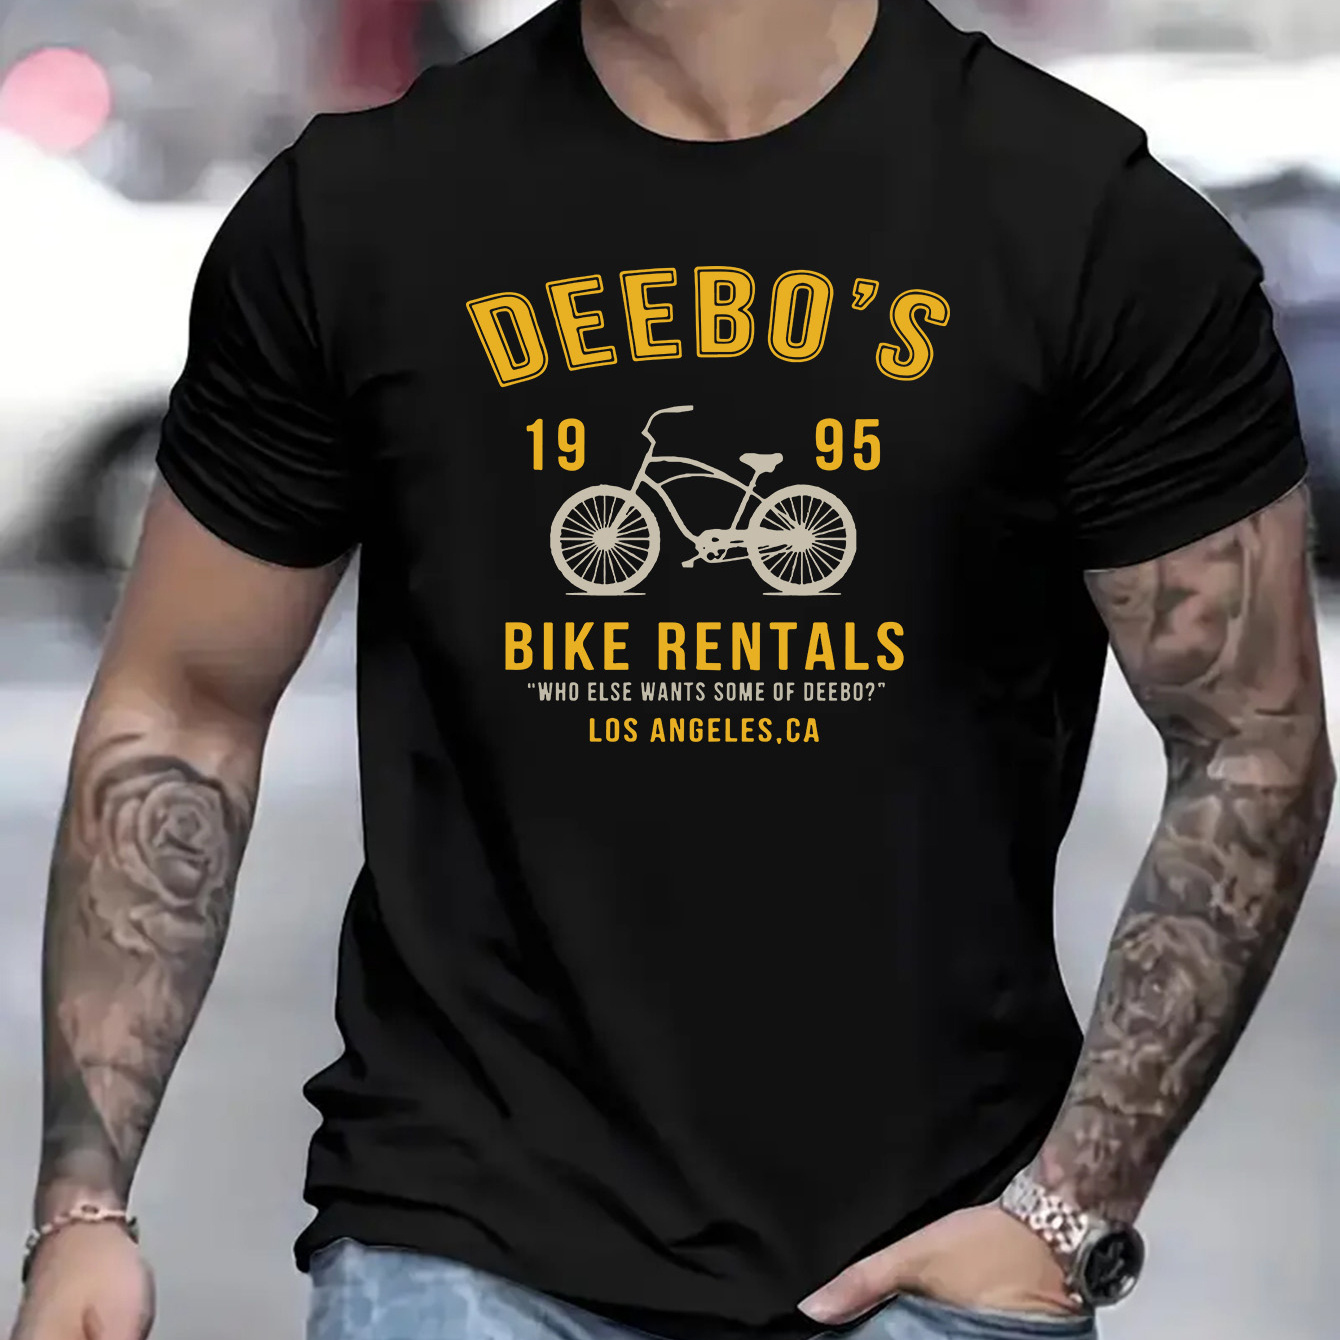 

Deebo's 1995 Bike Rentals Print T-shirt, Tees For Men, Casual Short Sleeve T-shirt For Summer